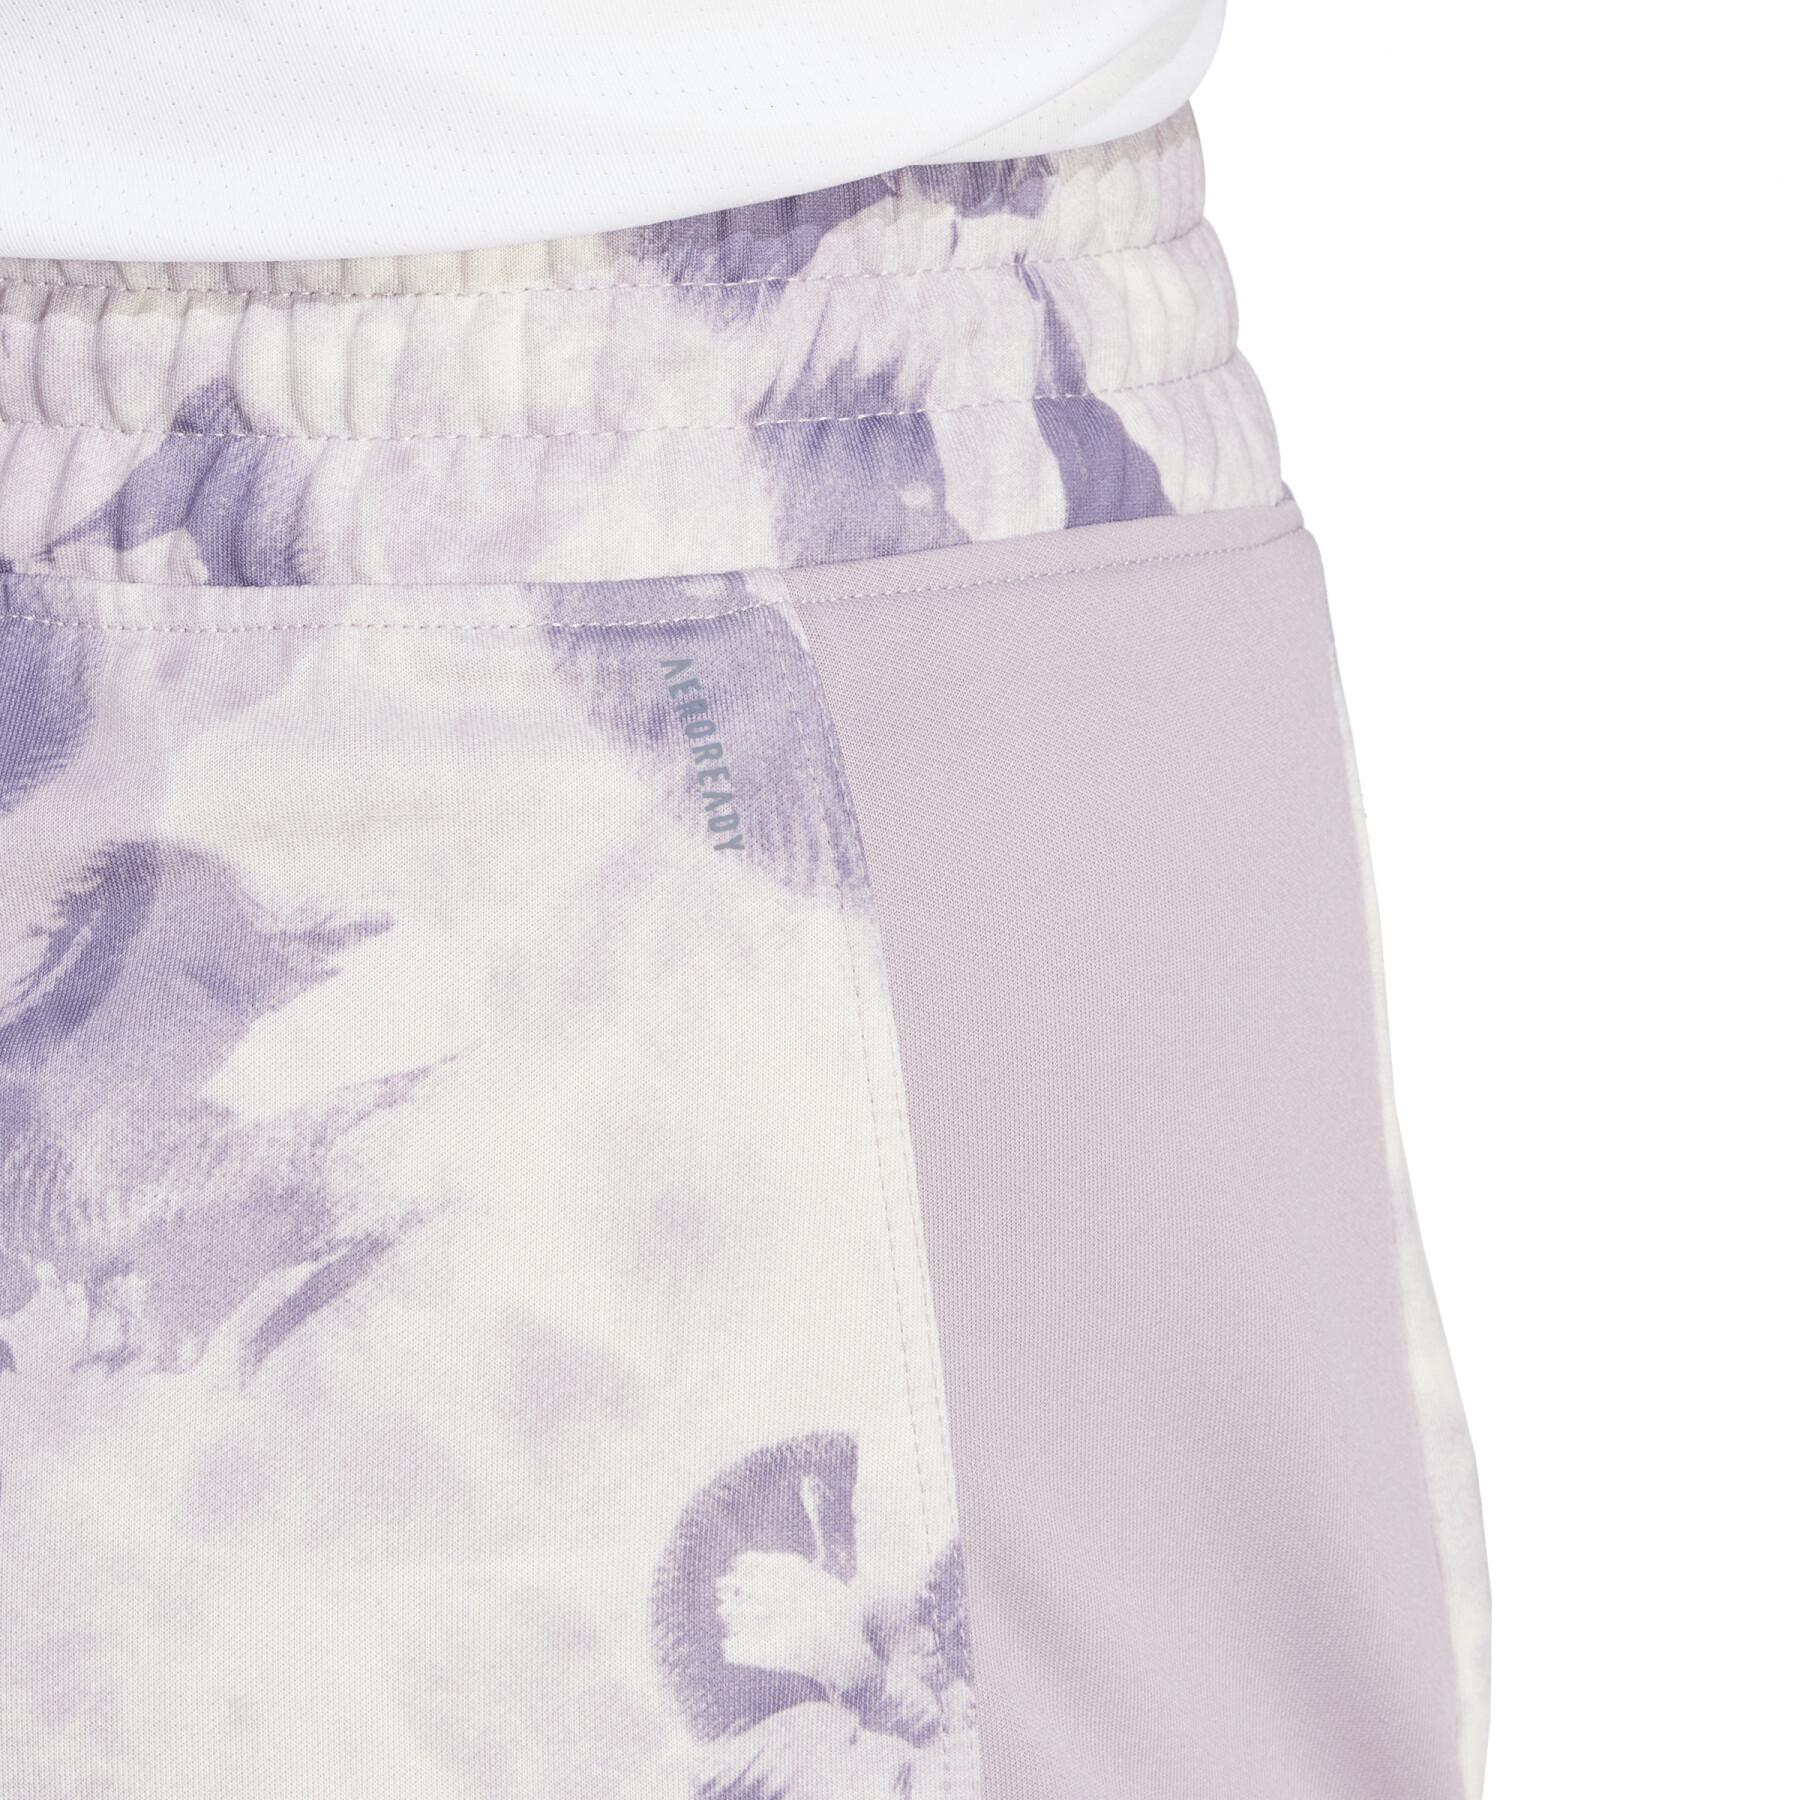 Short tricot femme adidas Pacer Essentials Aop Flower Tie-Dye